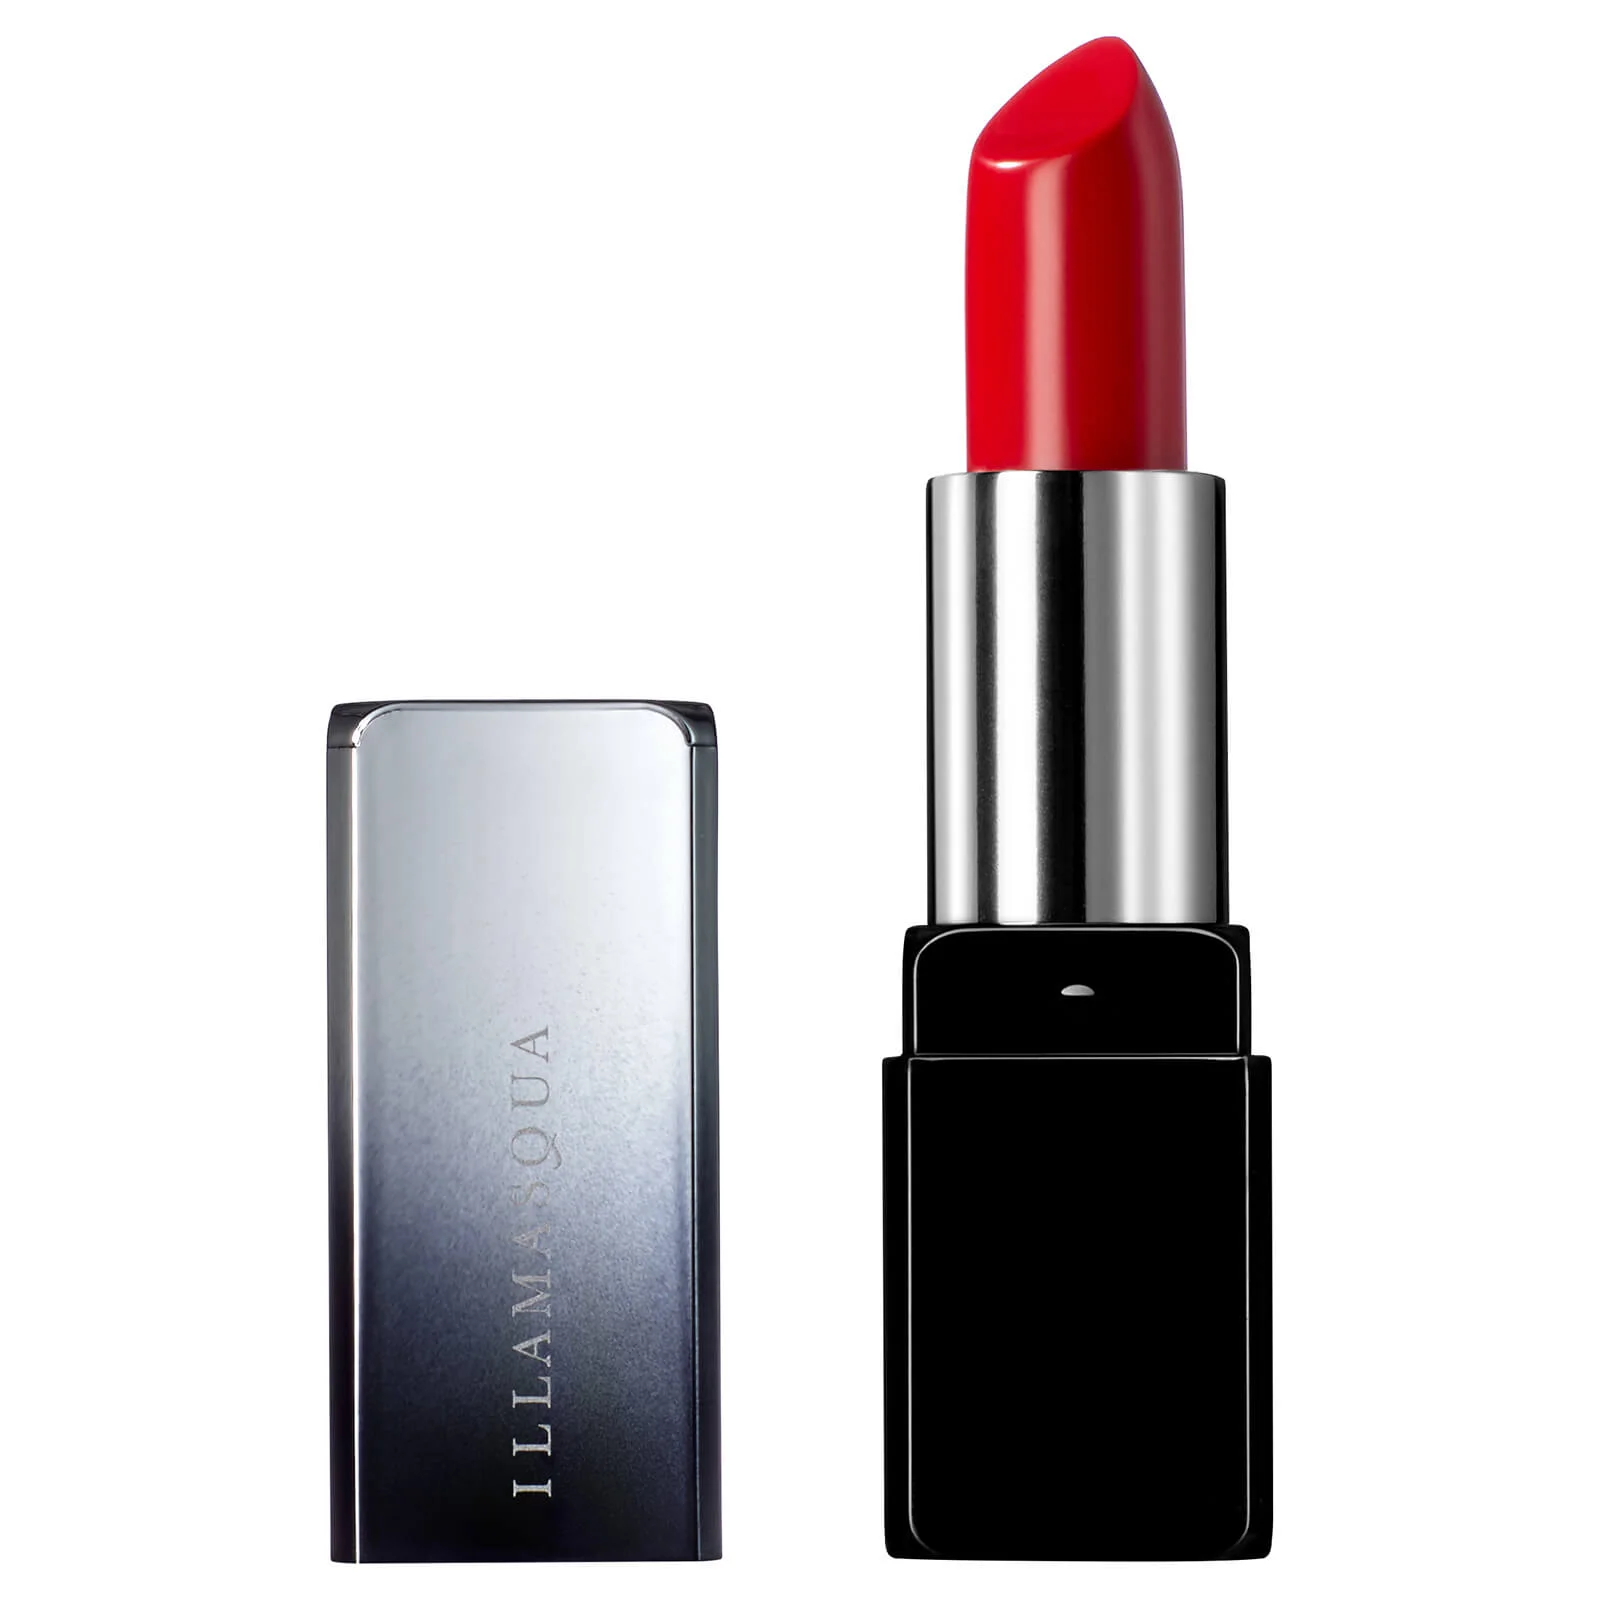 Illamasqua Limited Edition Antimatter Lipstick - Midnight Image 1